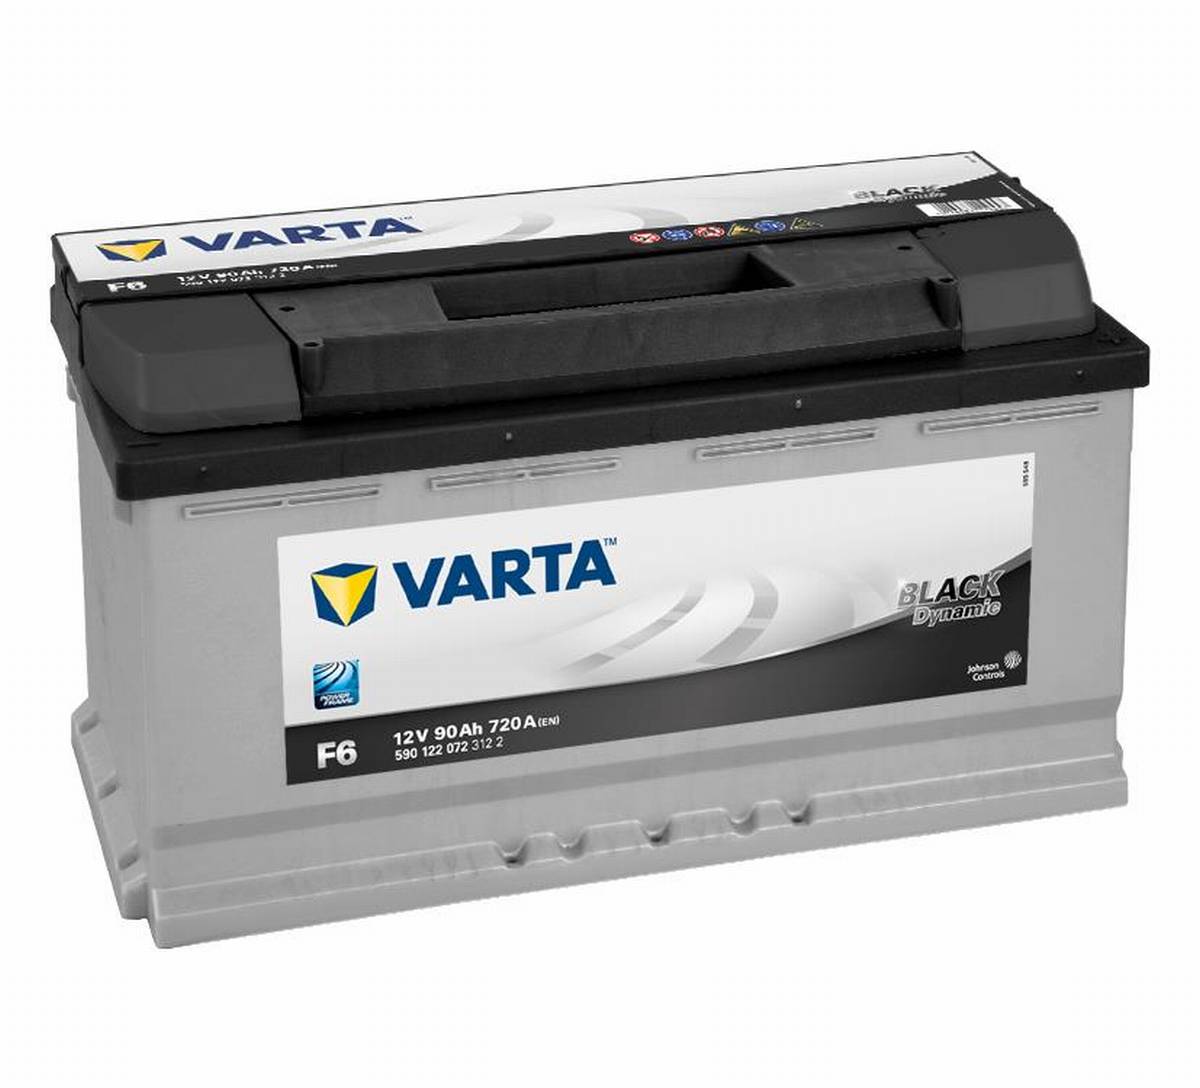 VARTA F6 Black Dynamic 12V 90Ah 720A Autobatterie 590 122 072, Starterbatterie, Boot, Batterien für